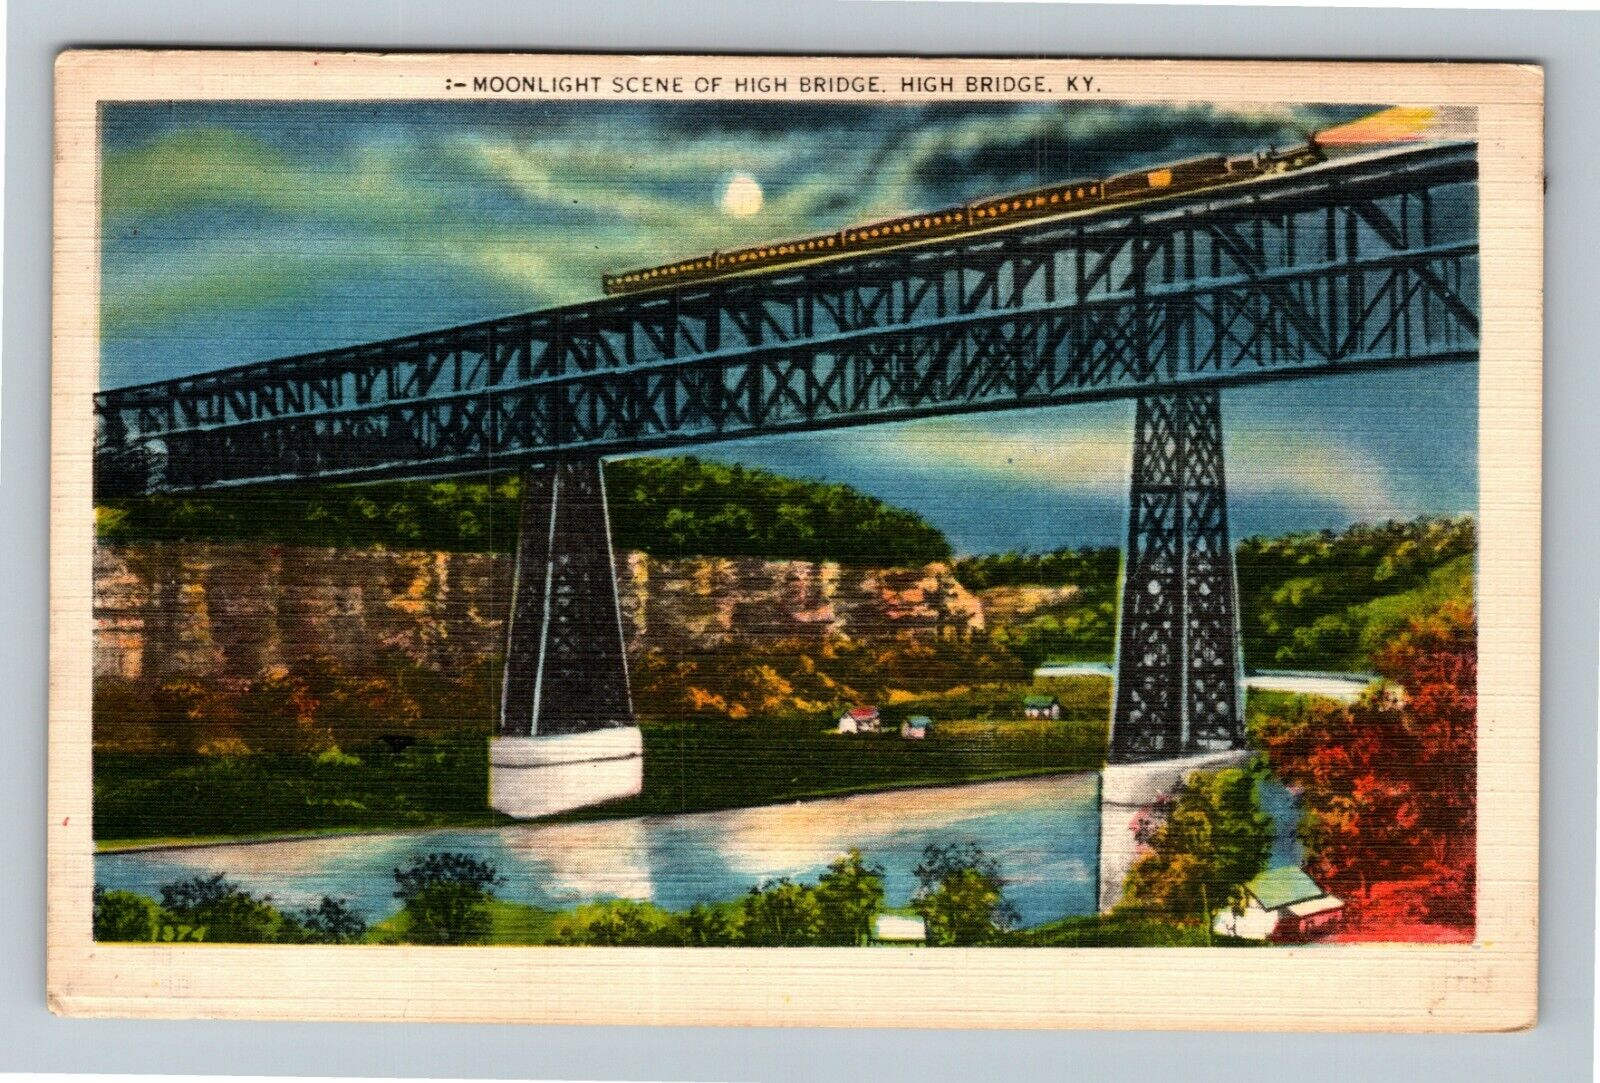 High Bridge KY-Kentucky Moonlight Scene High Bridge Scenic Vintage Postcard